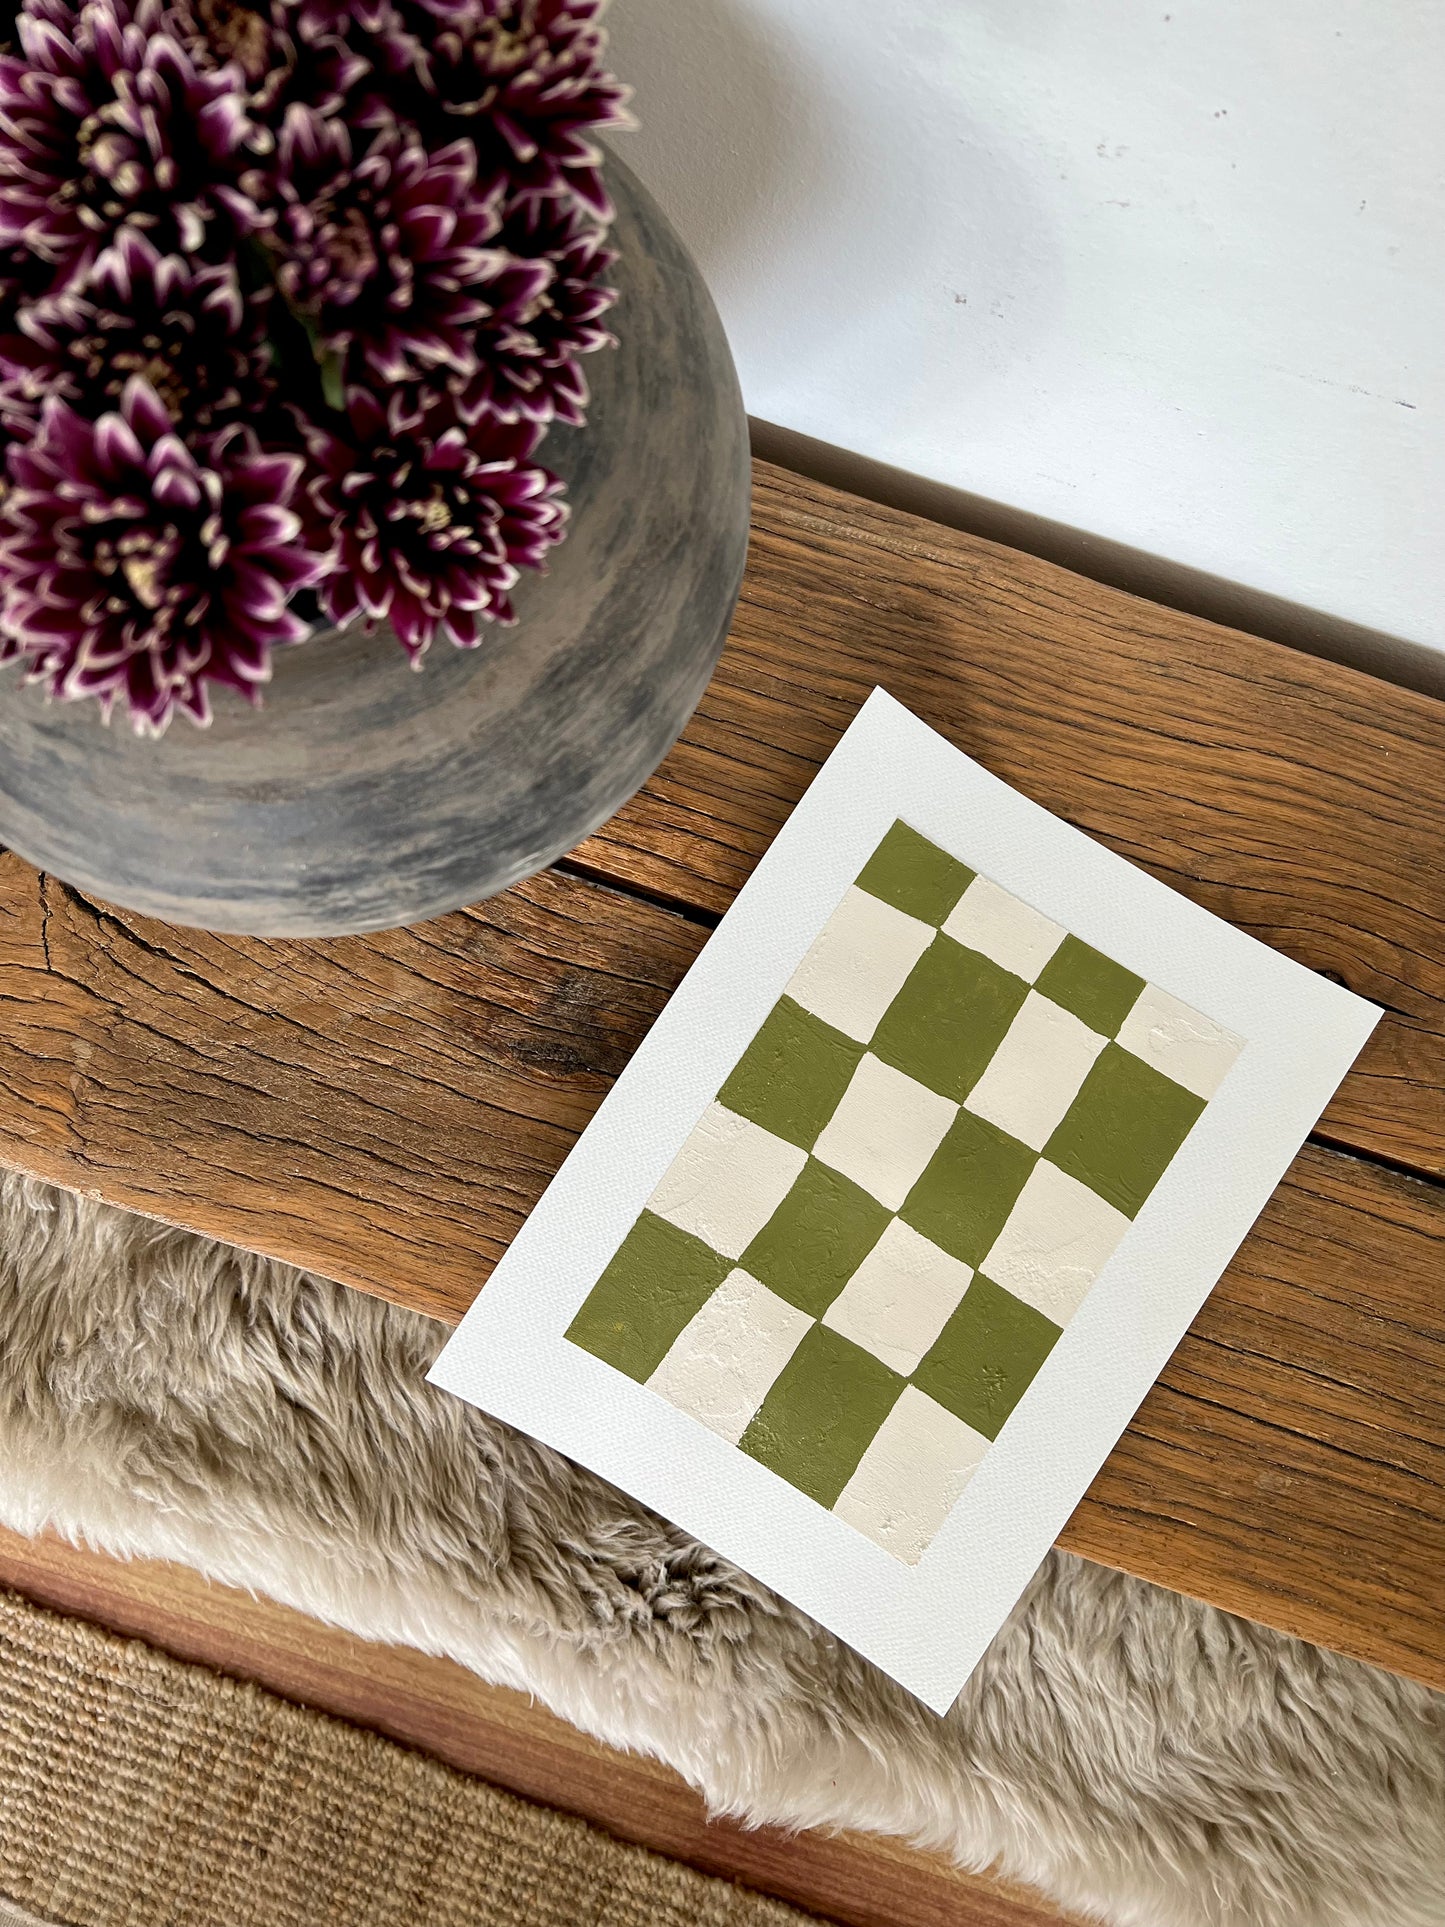 ‘Olive Checker Board’ on Paper